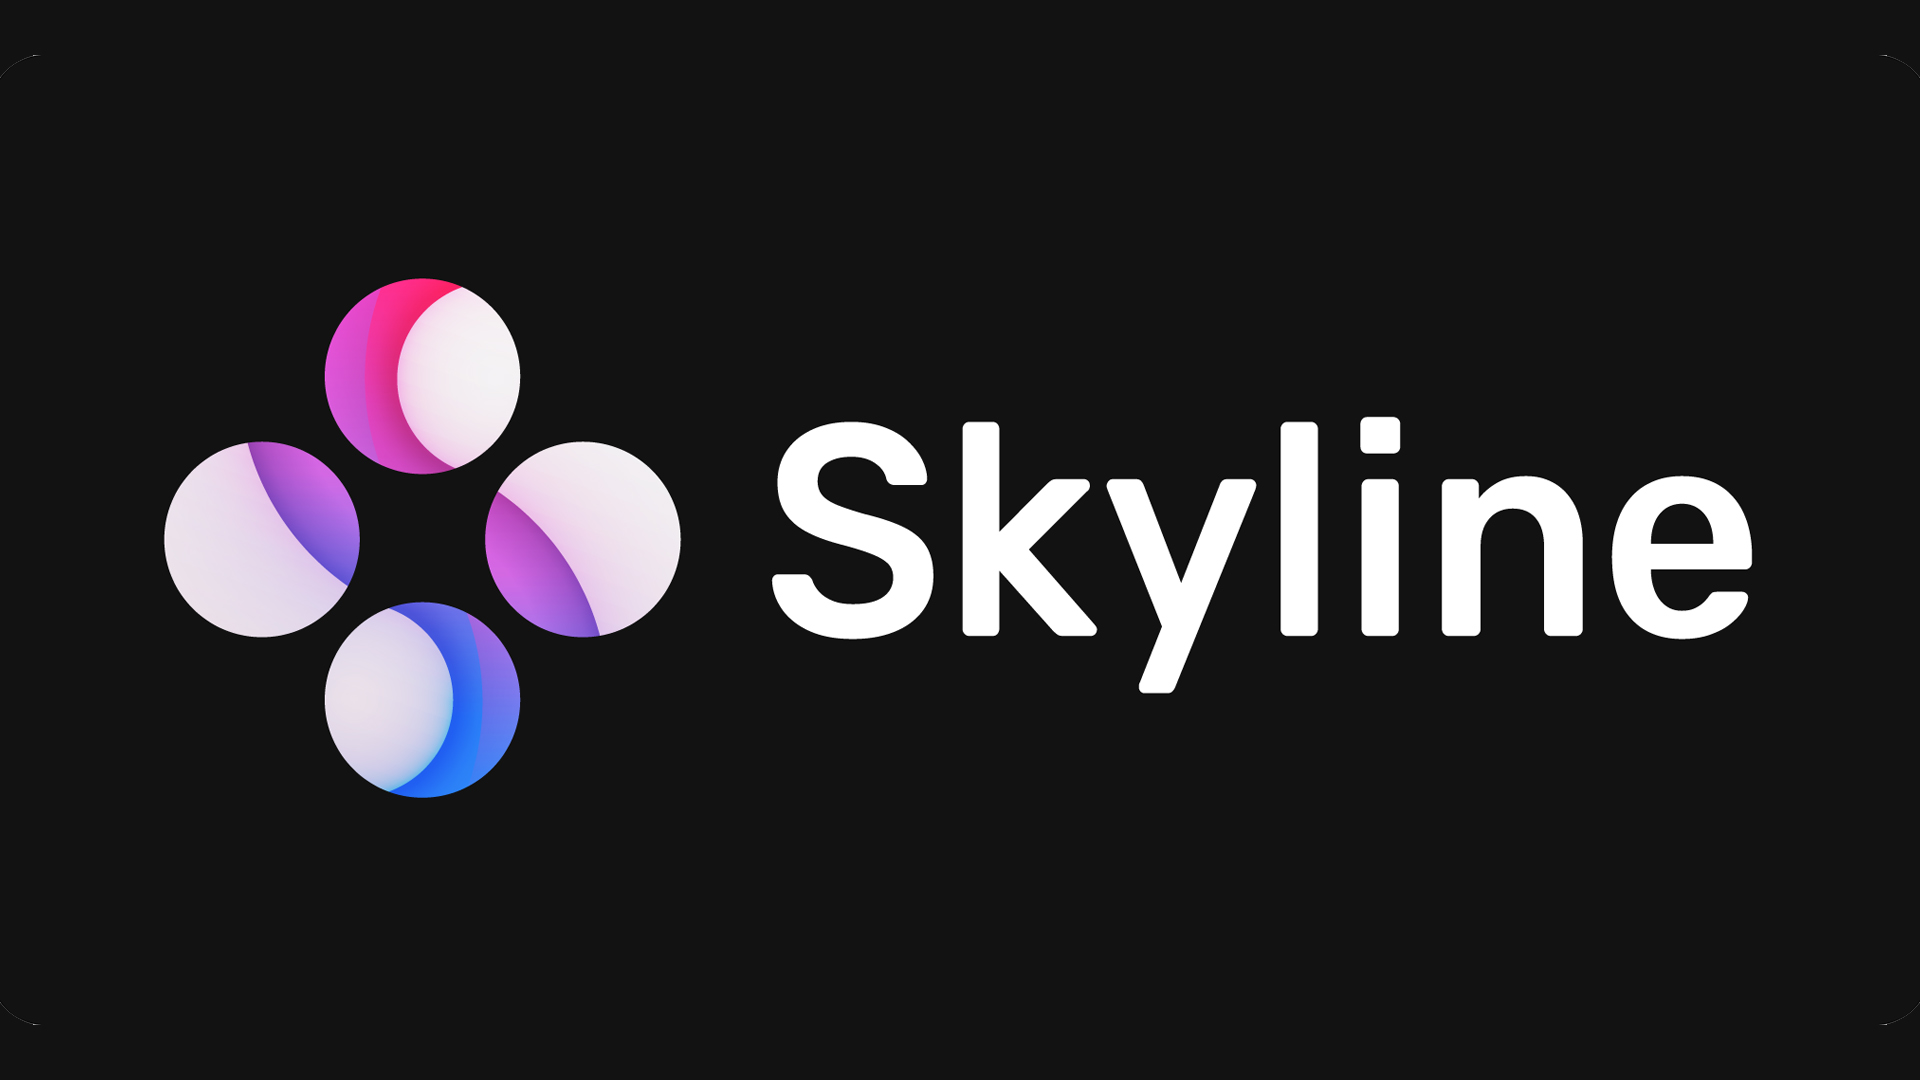 The Skyline logo